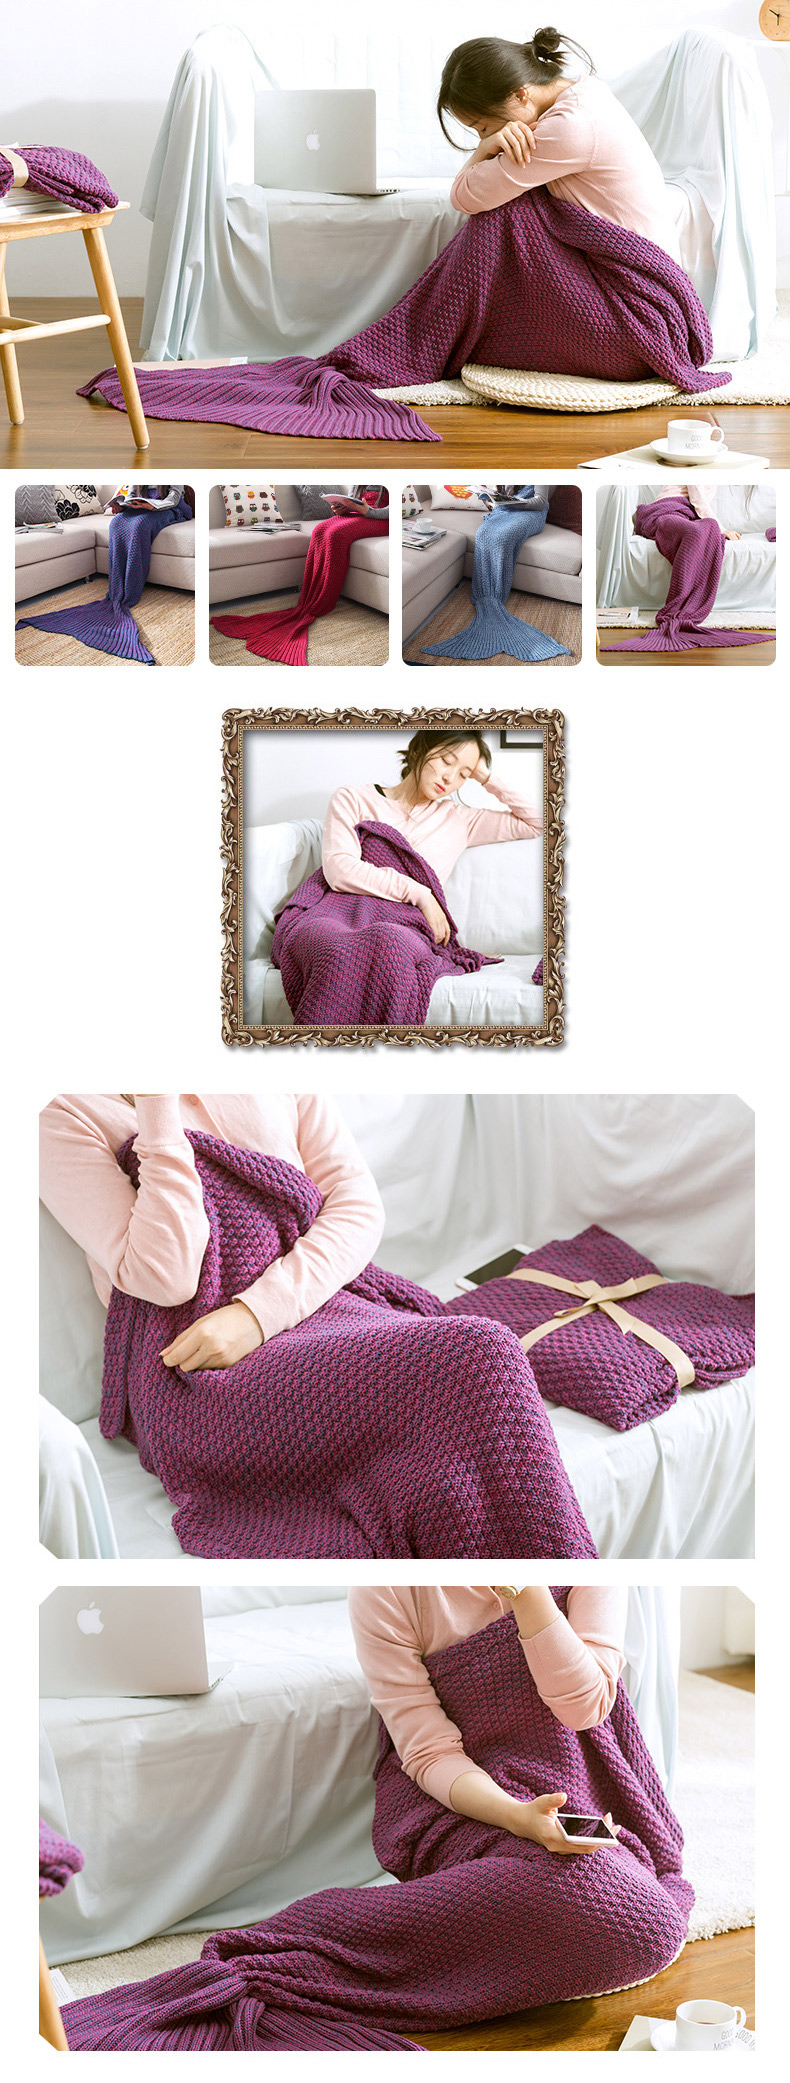 Yarn-Knitted-Mermaid-Tail-Blanket-Handmade-Crochet-Throw-Super-Soft-Sofa-Bed-Mat-Sleeping-Bag-1083119-1